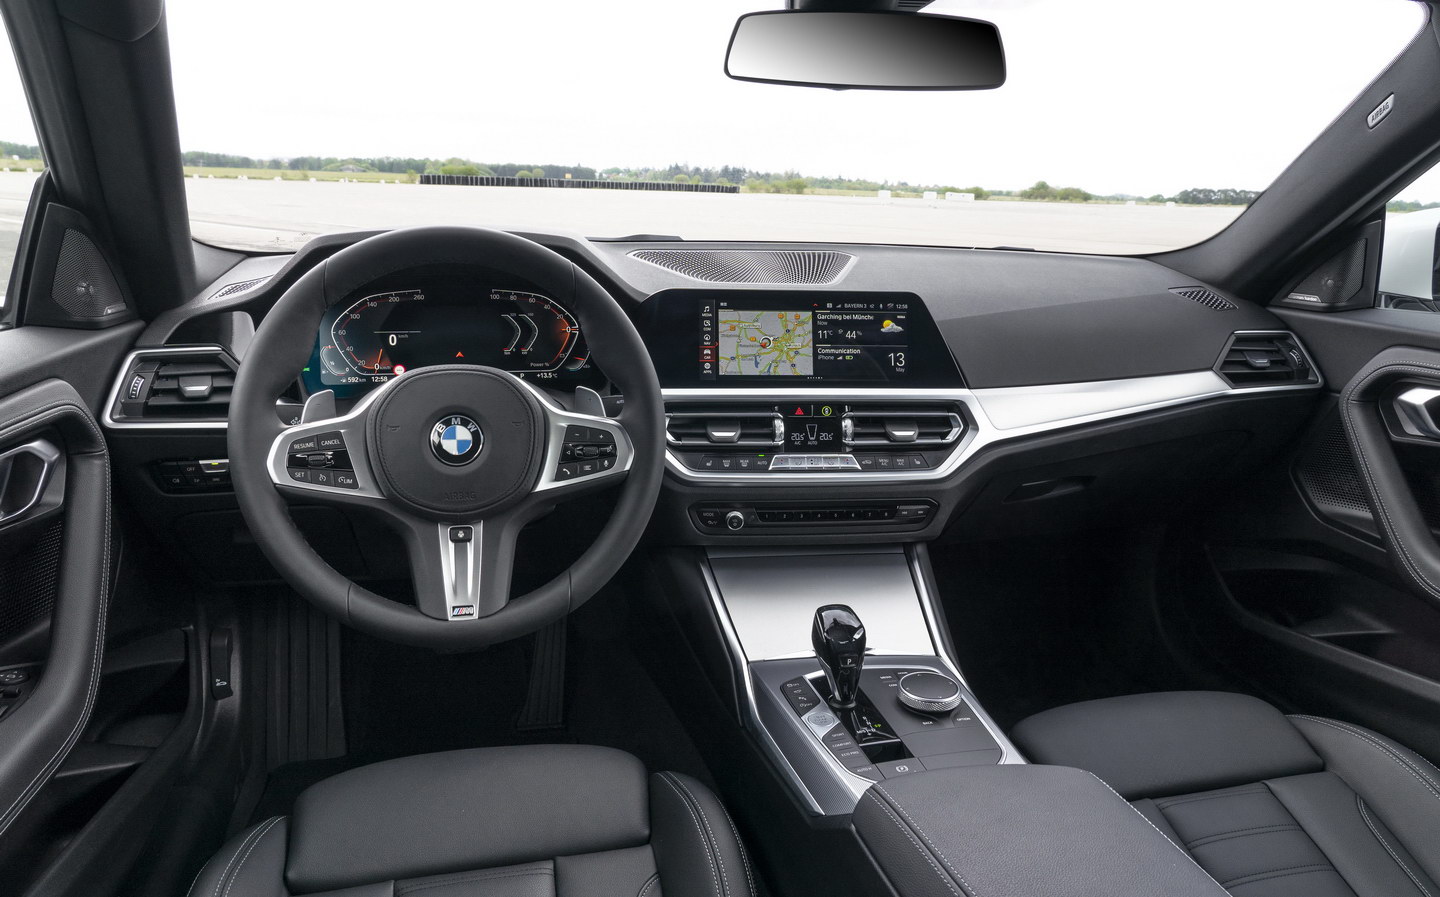 New BMW 2 Series interior